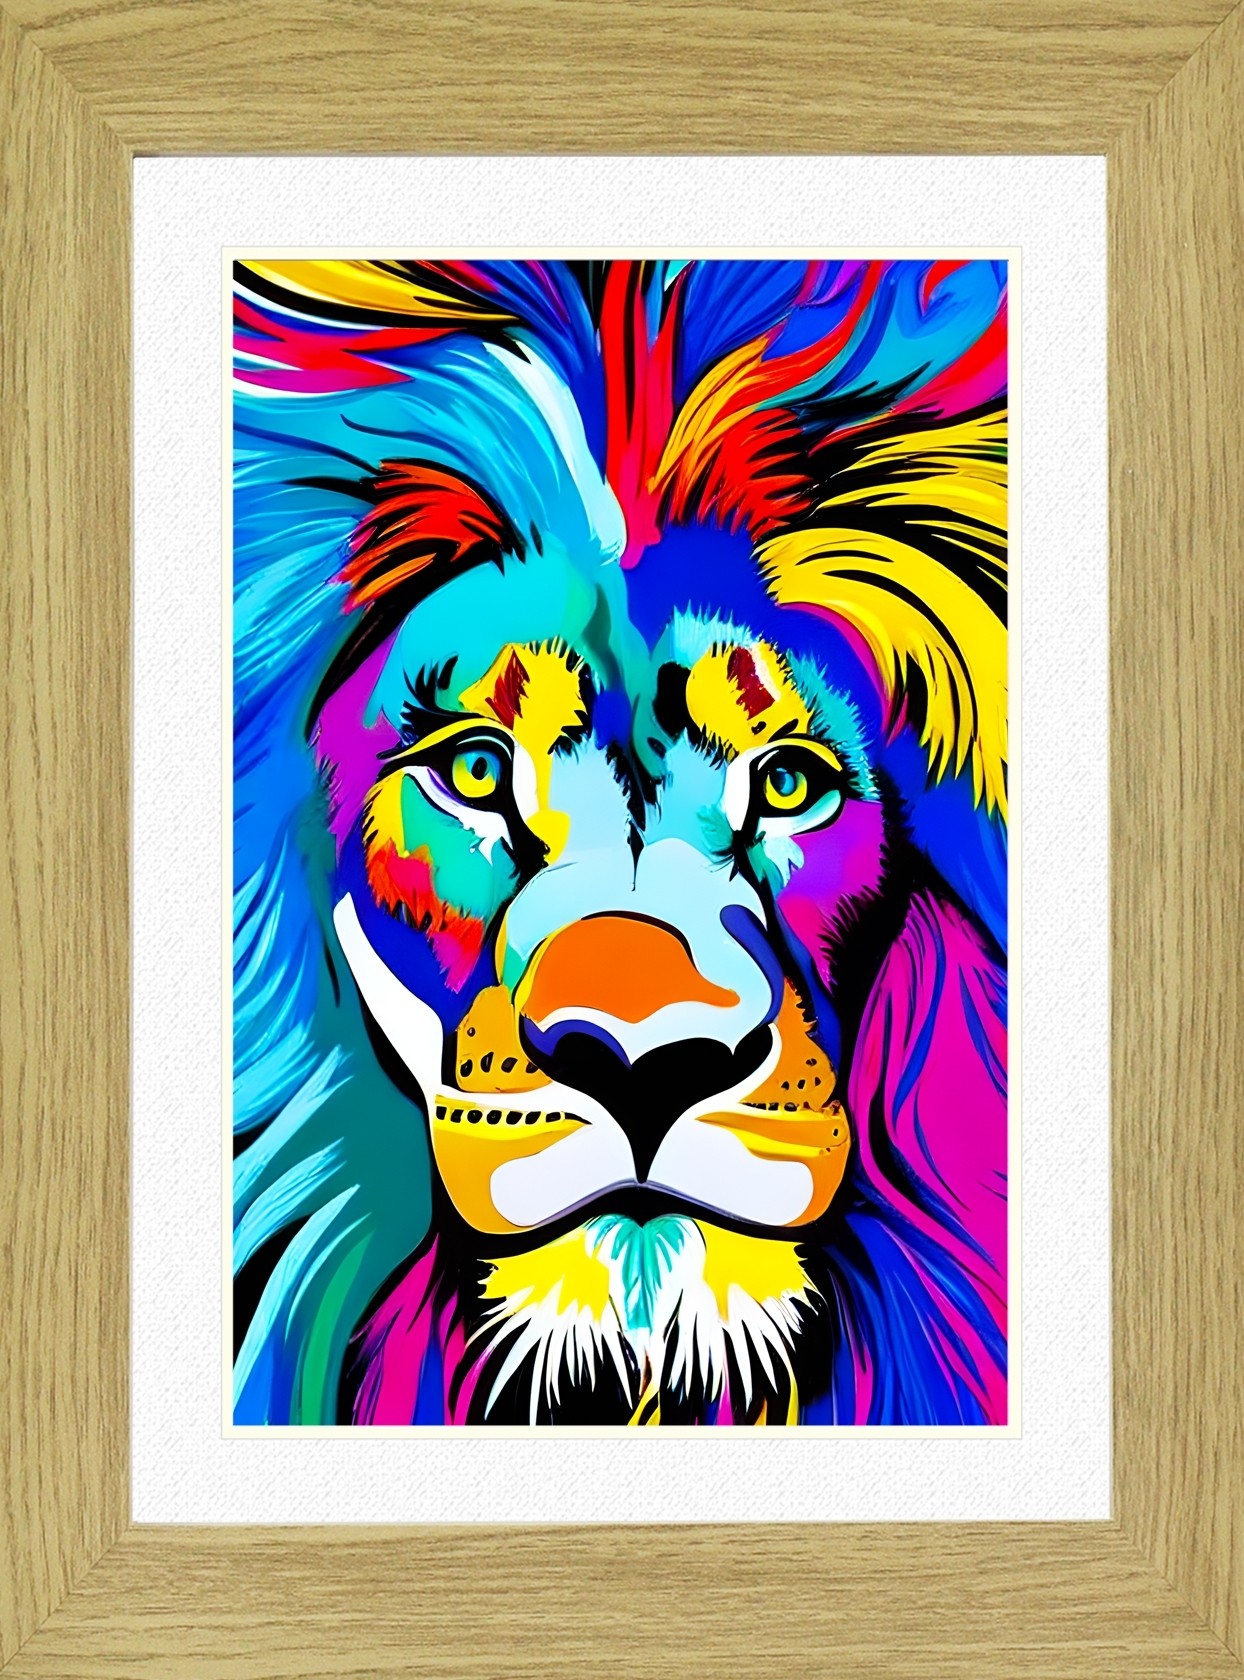 Lion Animal Picture Framed Colourful Abstract Art (25cm x 20cm Light Oak Frame)